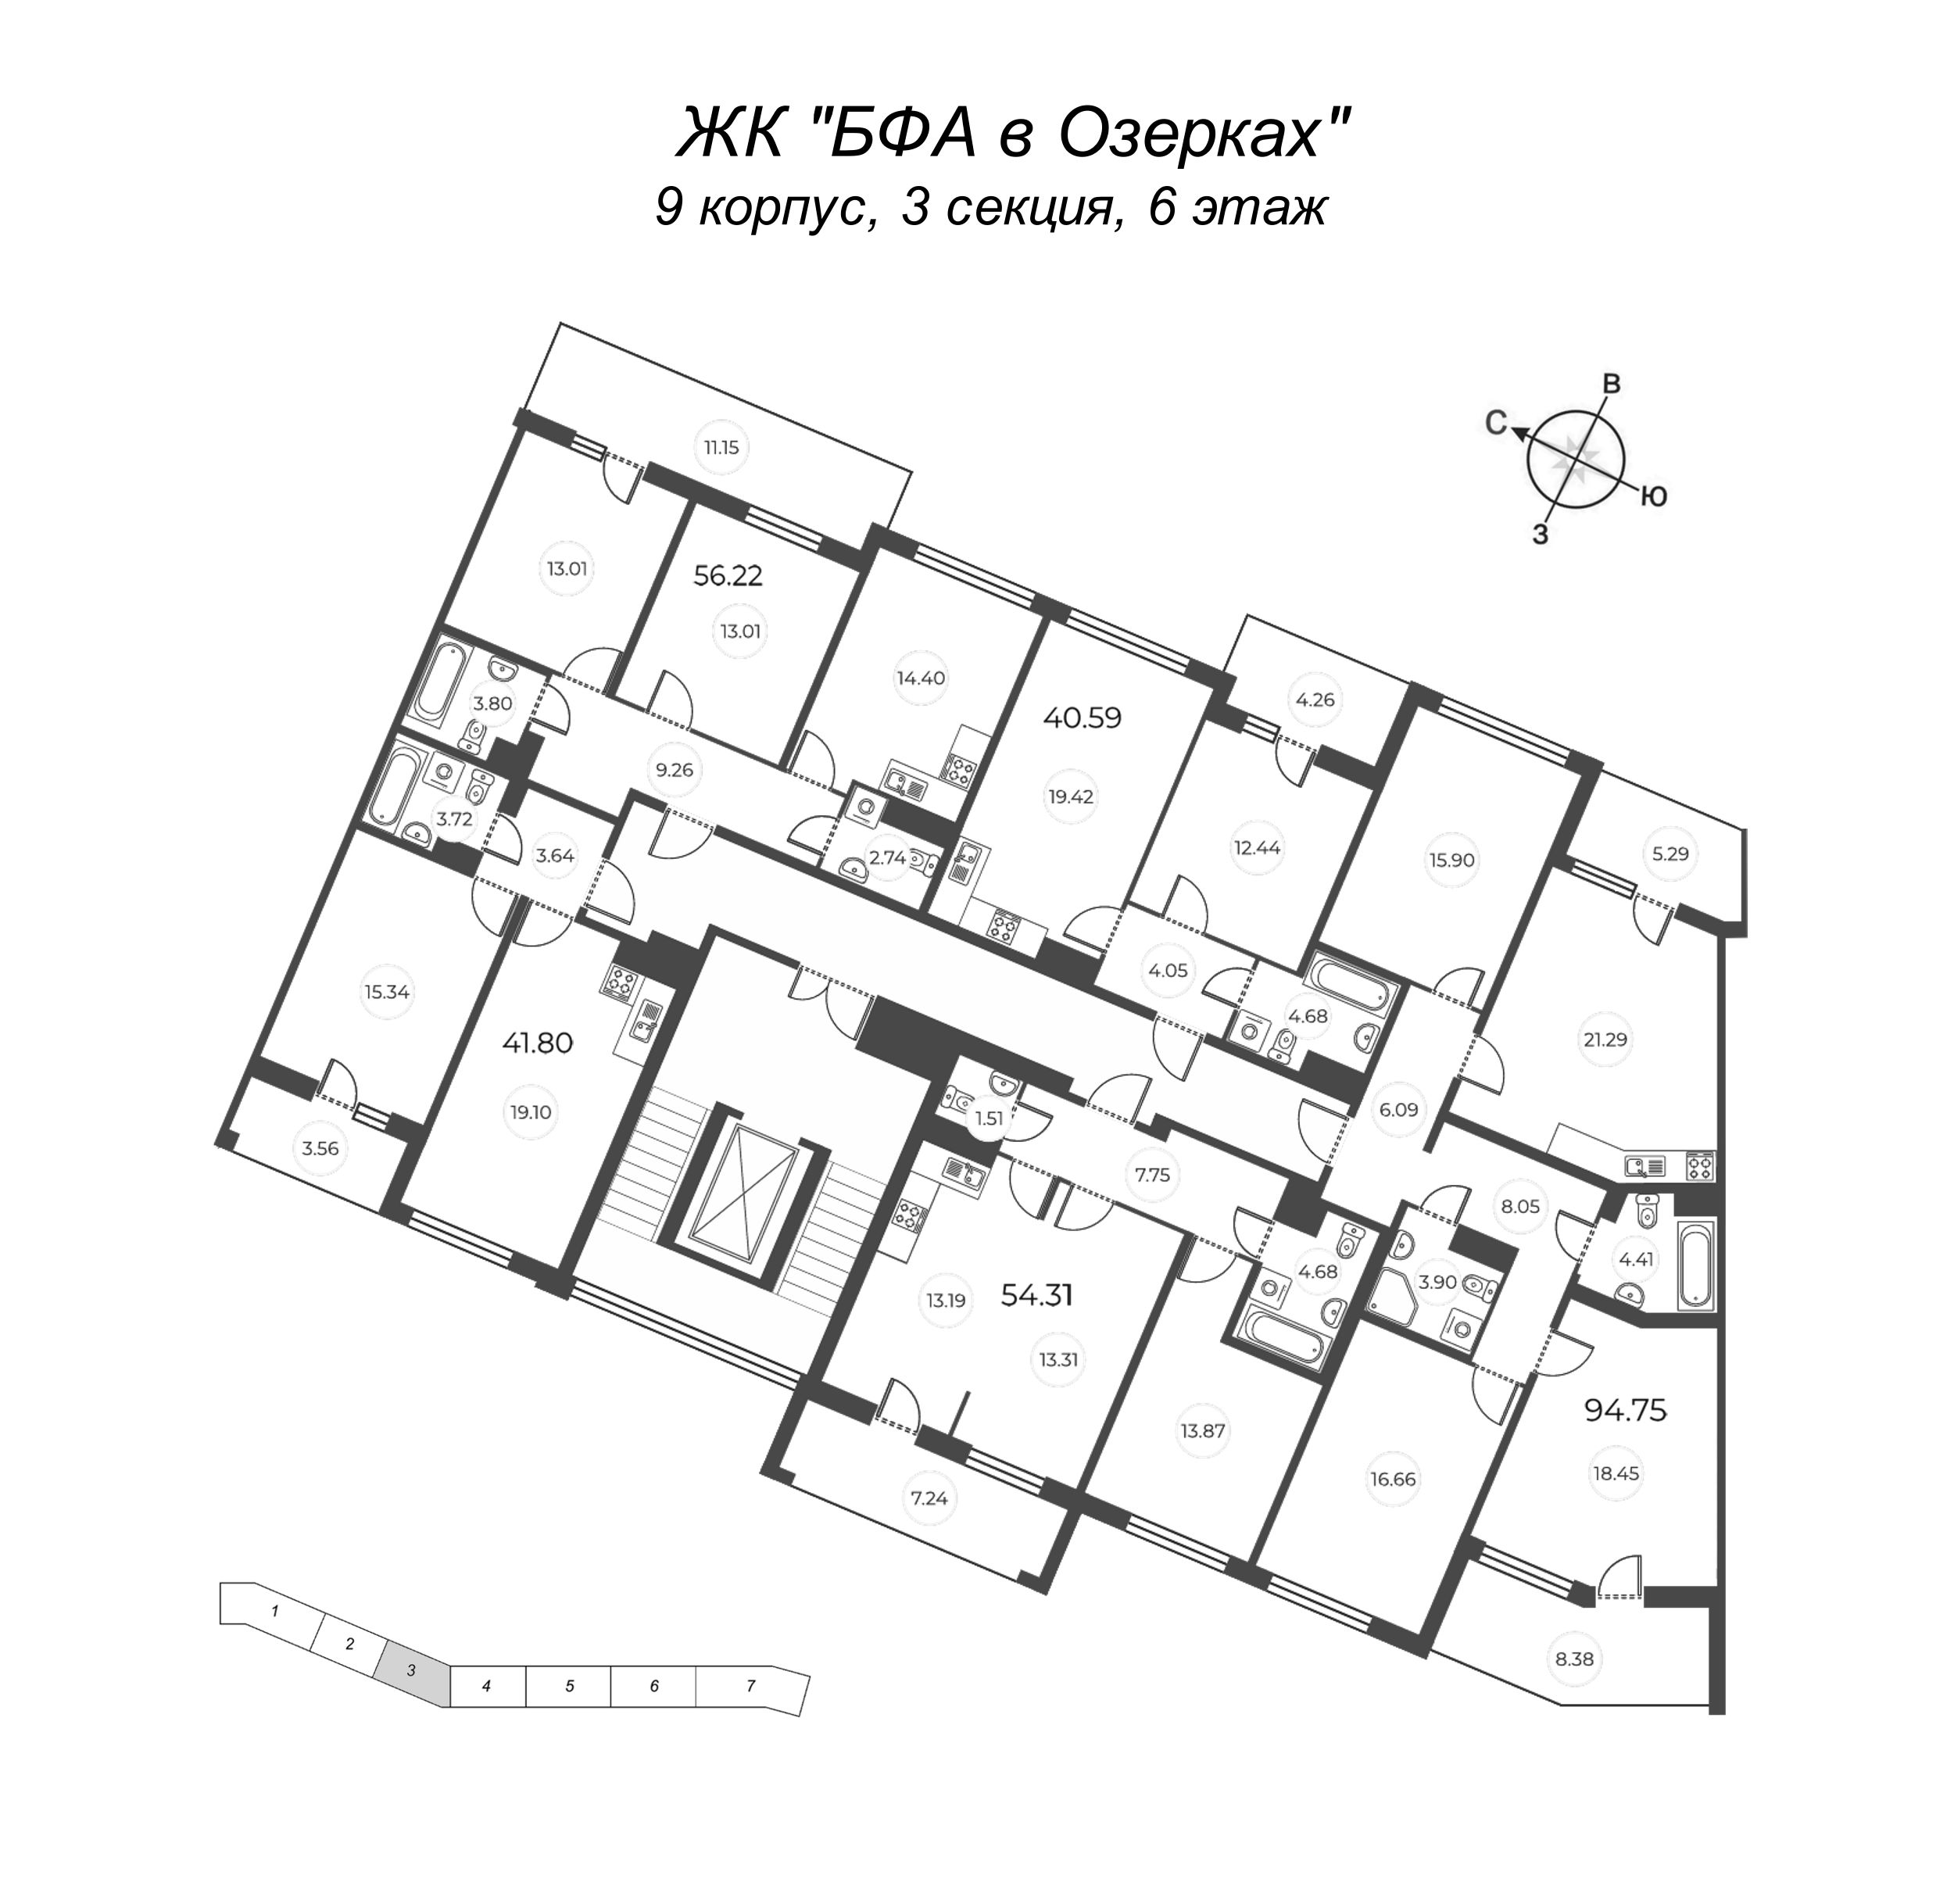 2-комнатная (Евро) квартира, 57.93 м² - планировка этажа